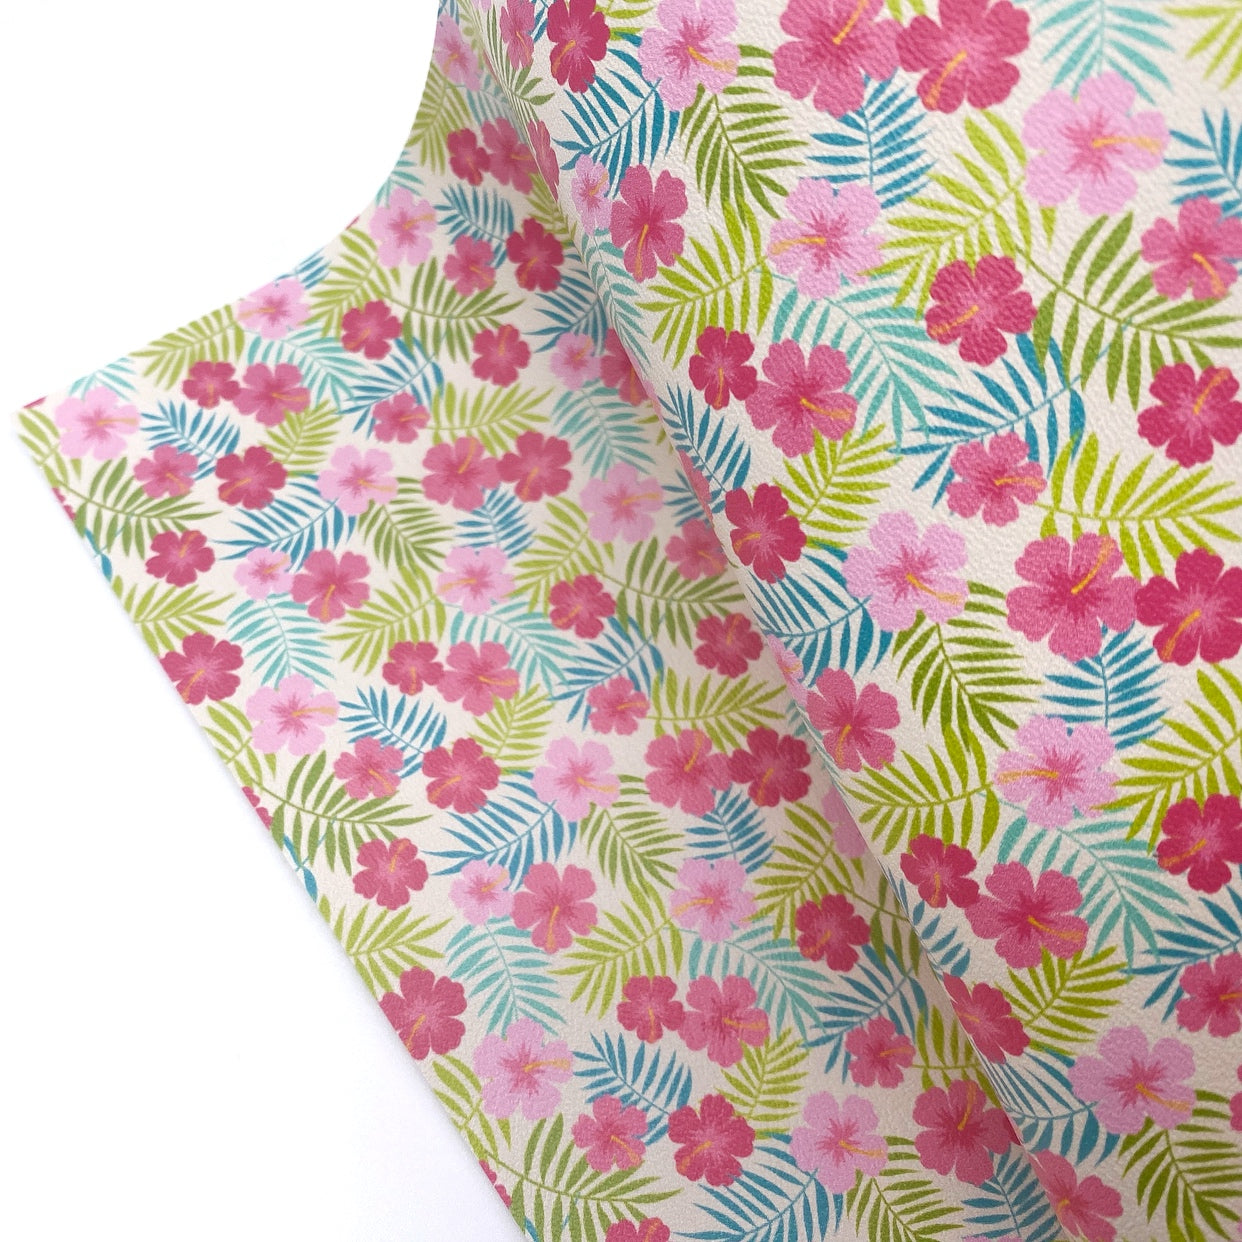 Tropical Florals Premium Faux Leather Fabric Sheets